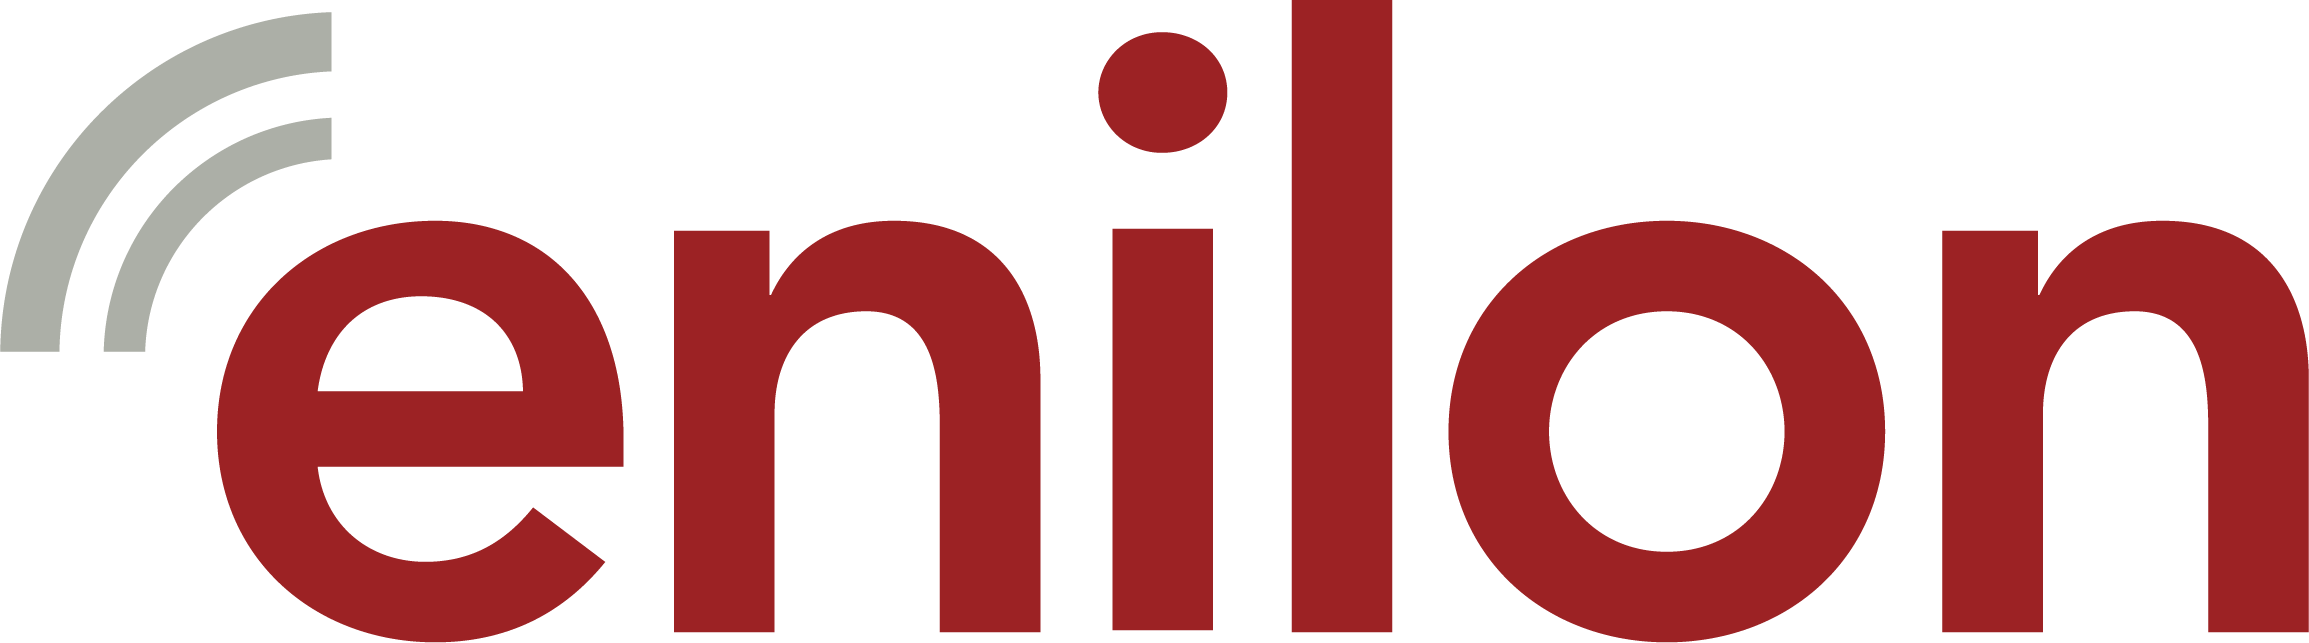 the enilon company logo